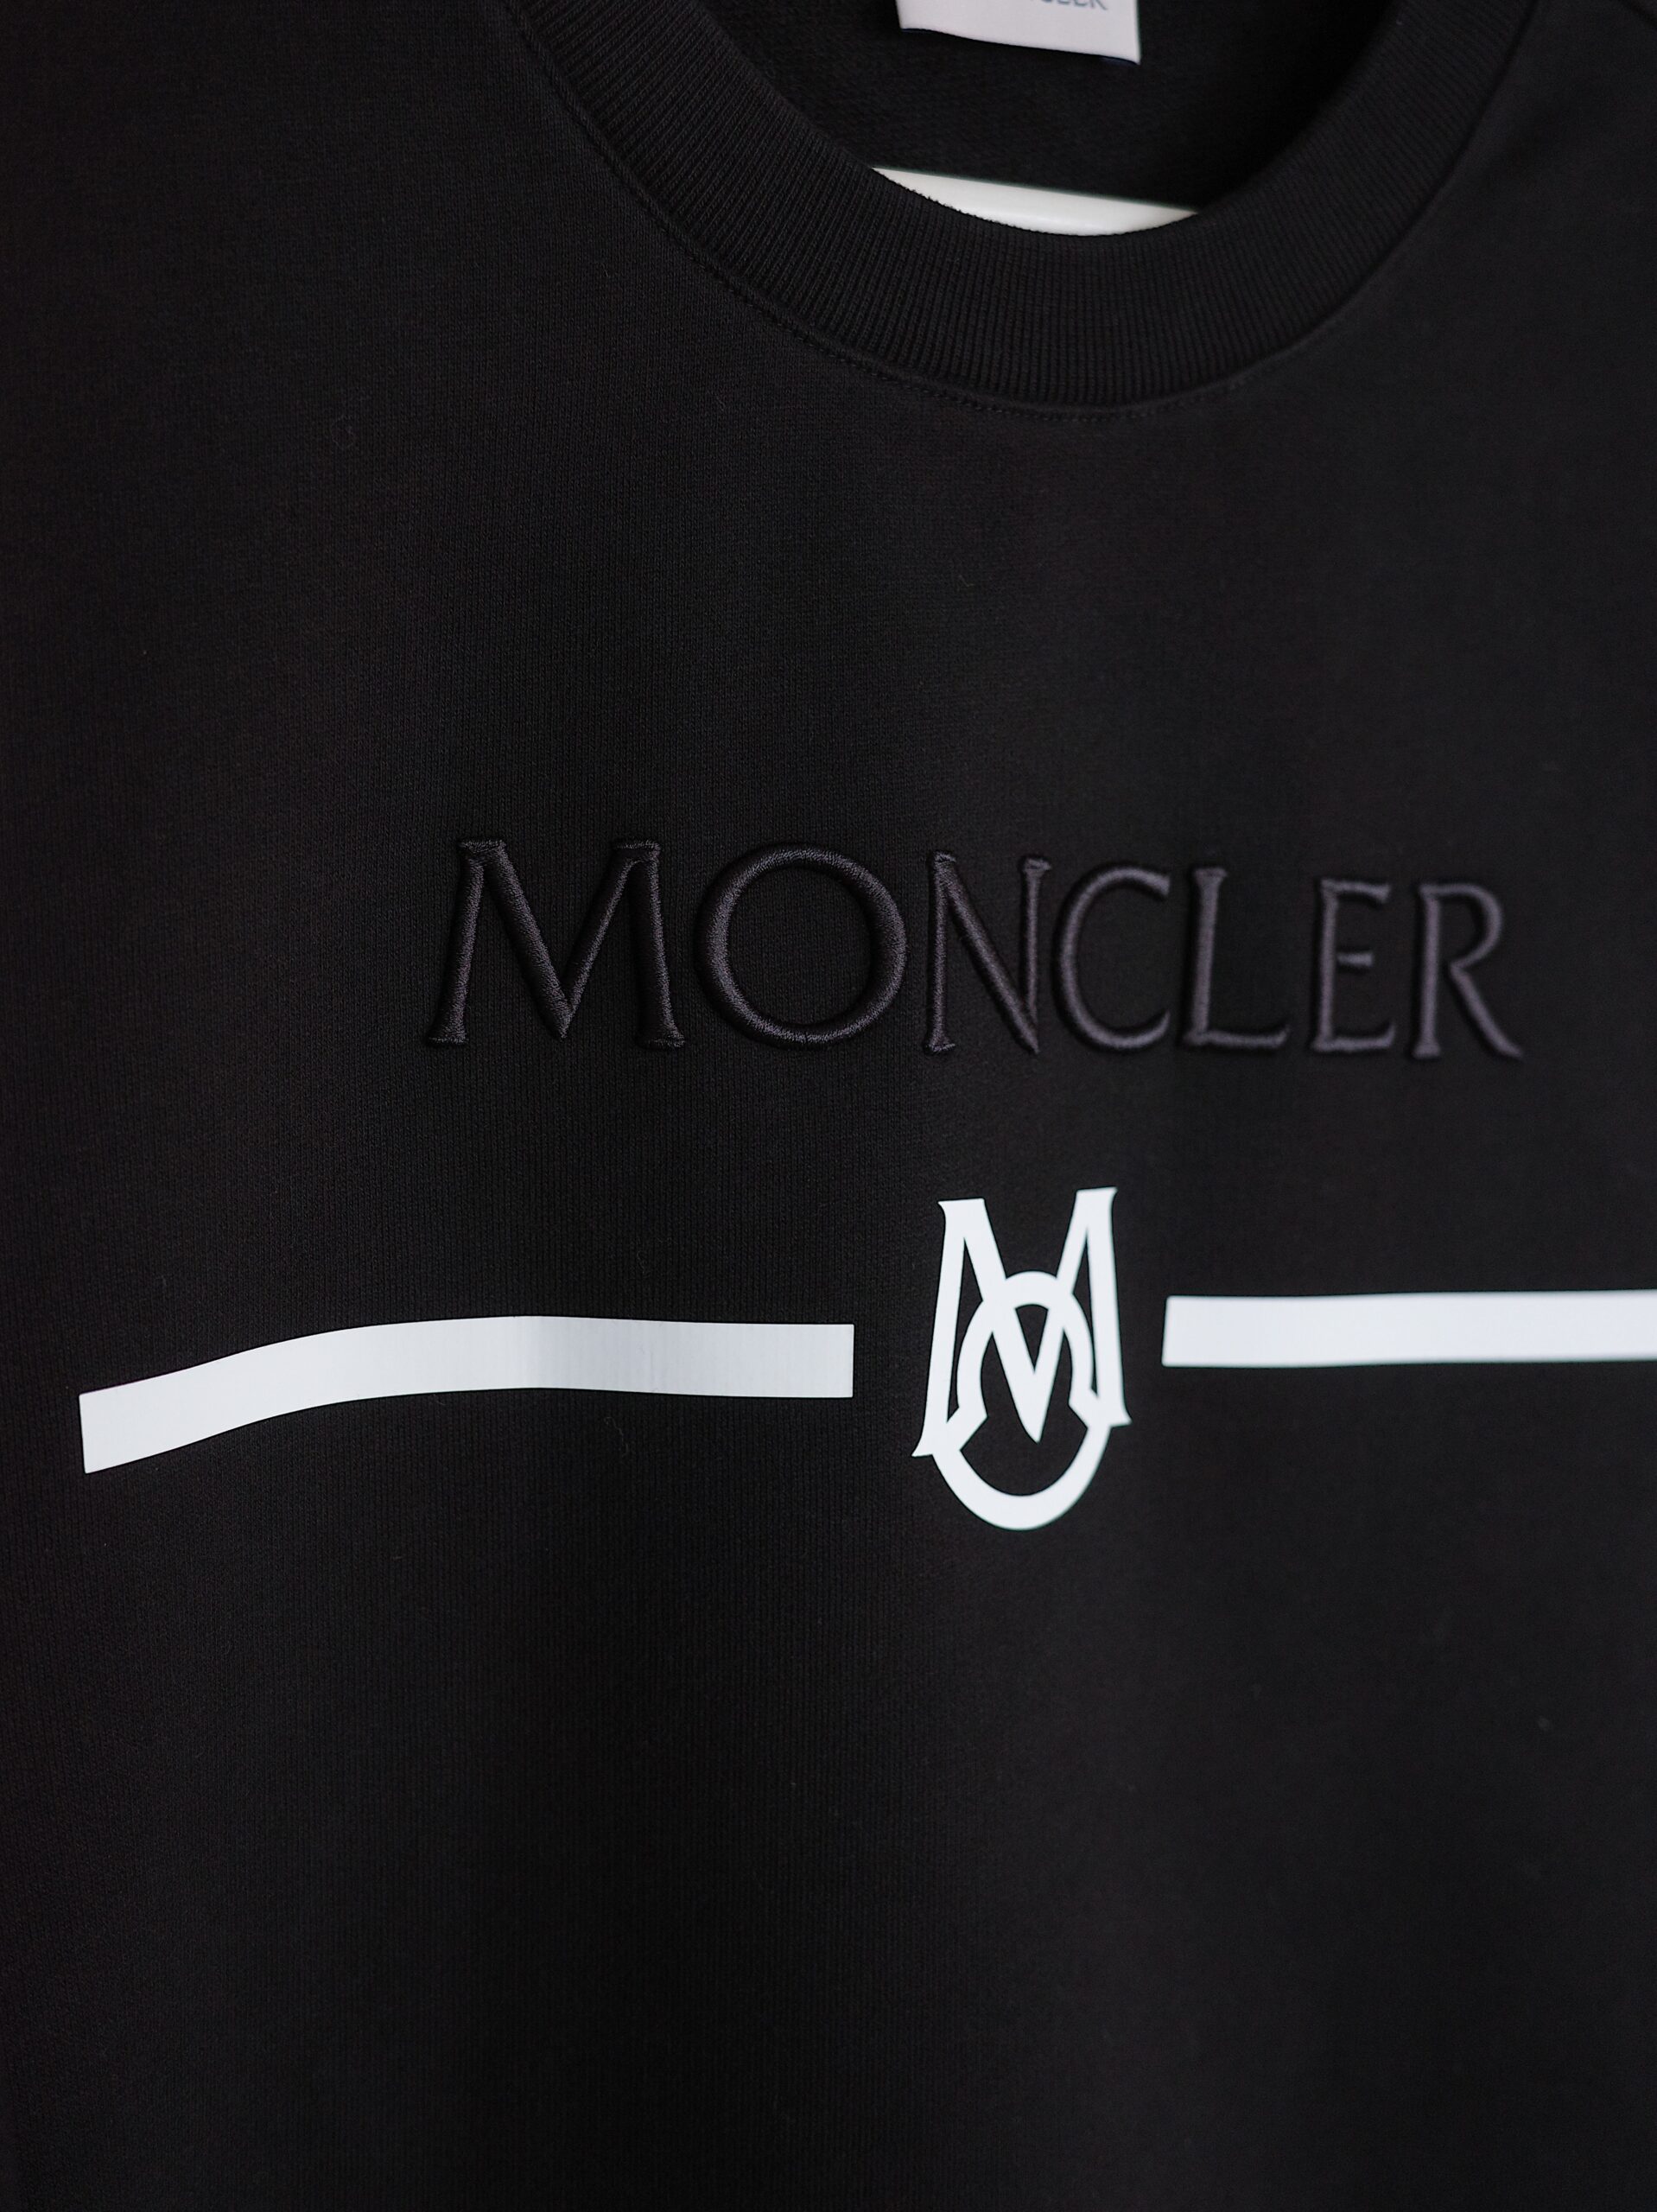 MONCLER モンクレール スウェット メンズ 新作 正規取扱店 公式通販 送料無料